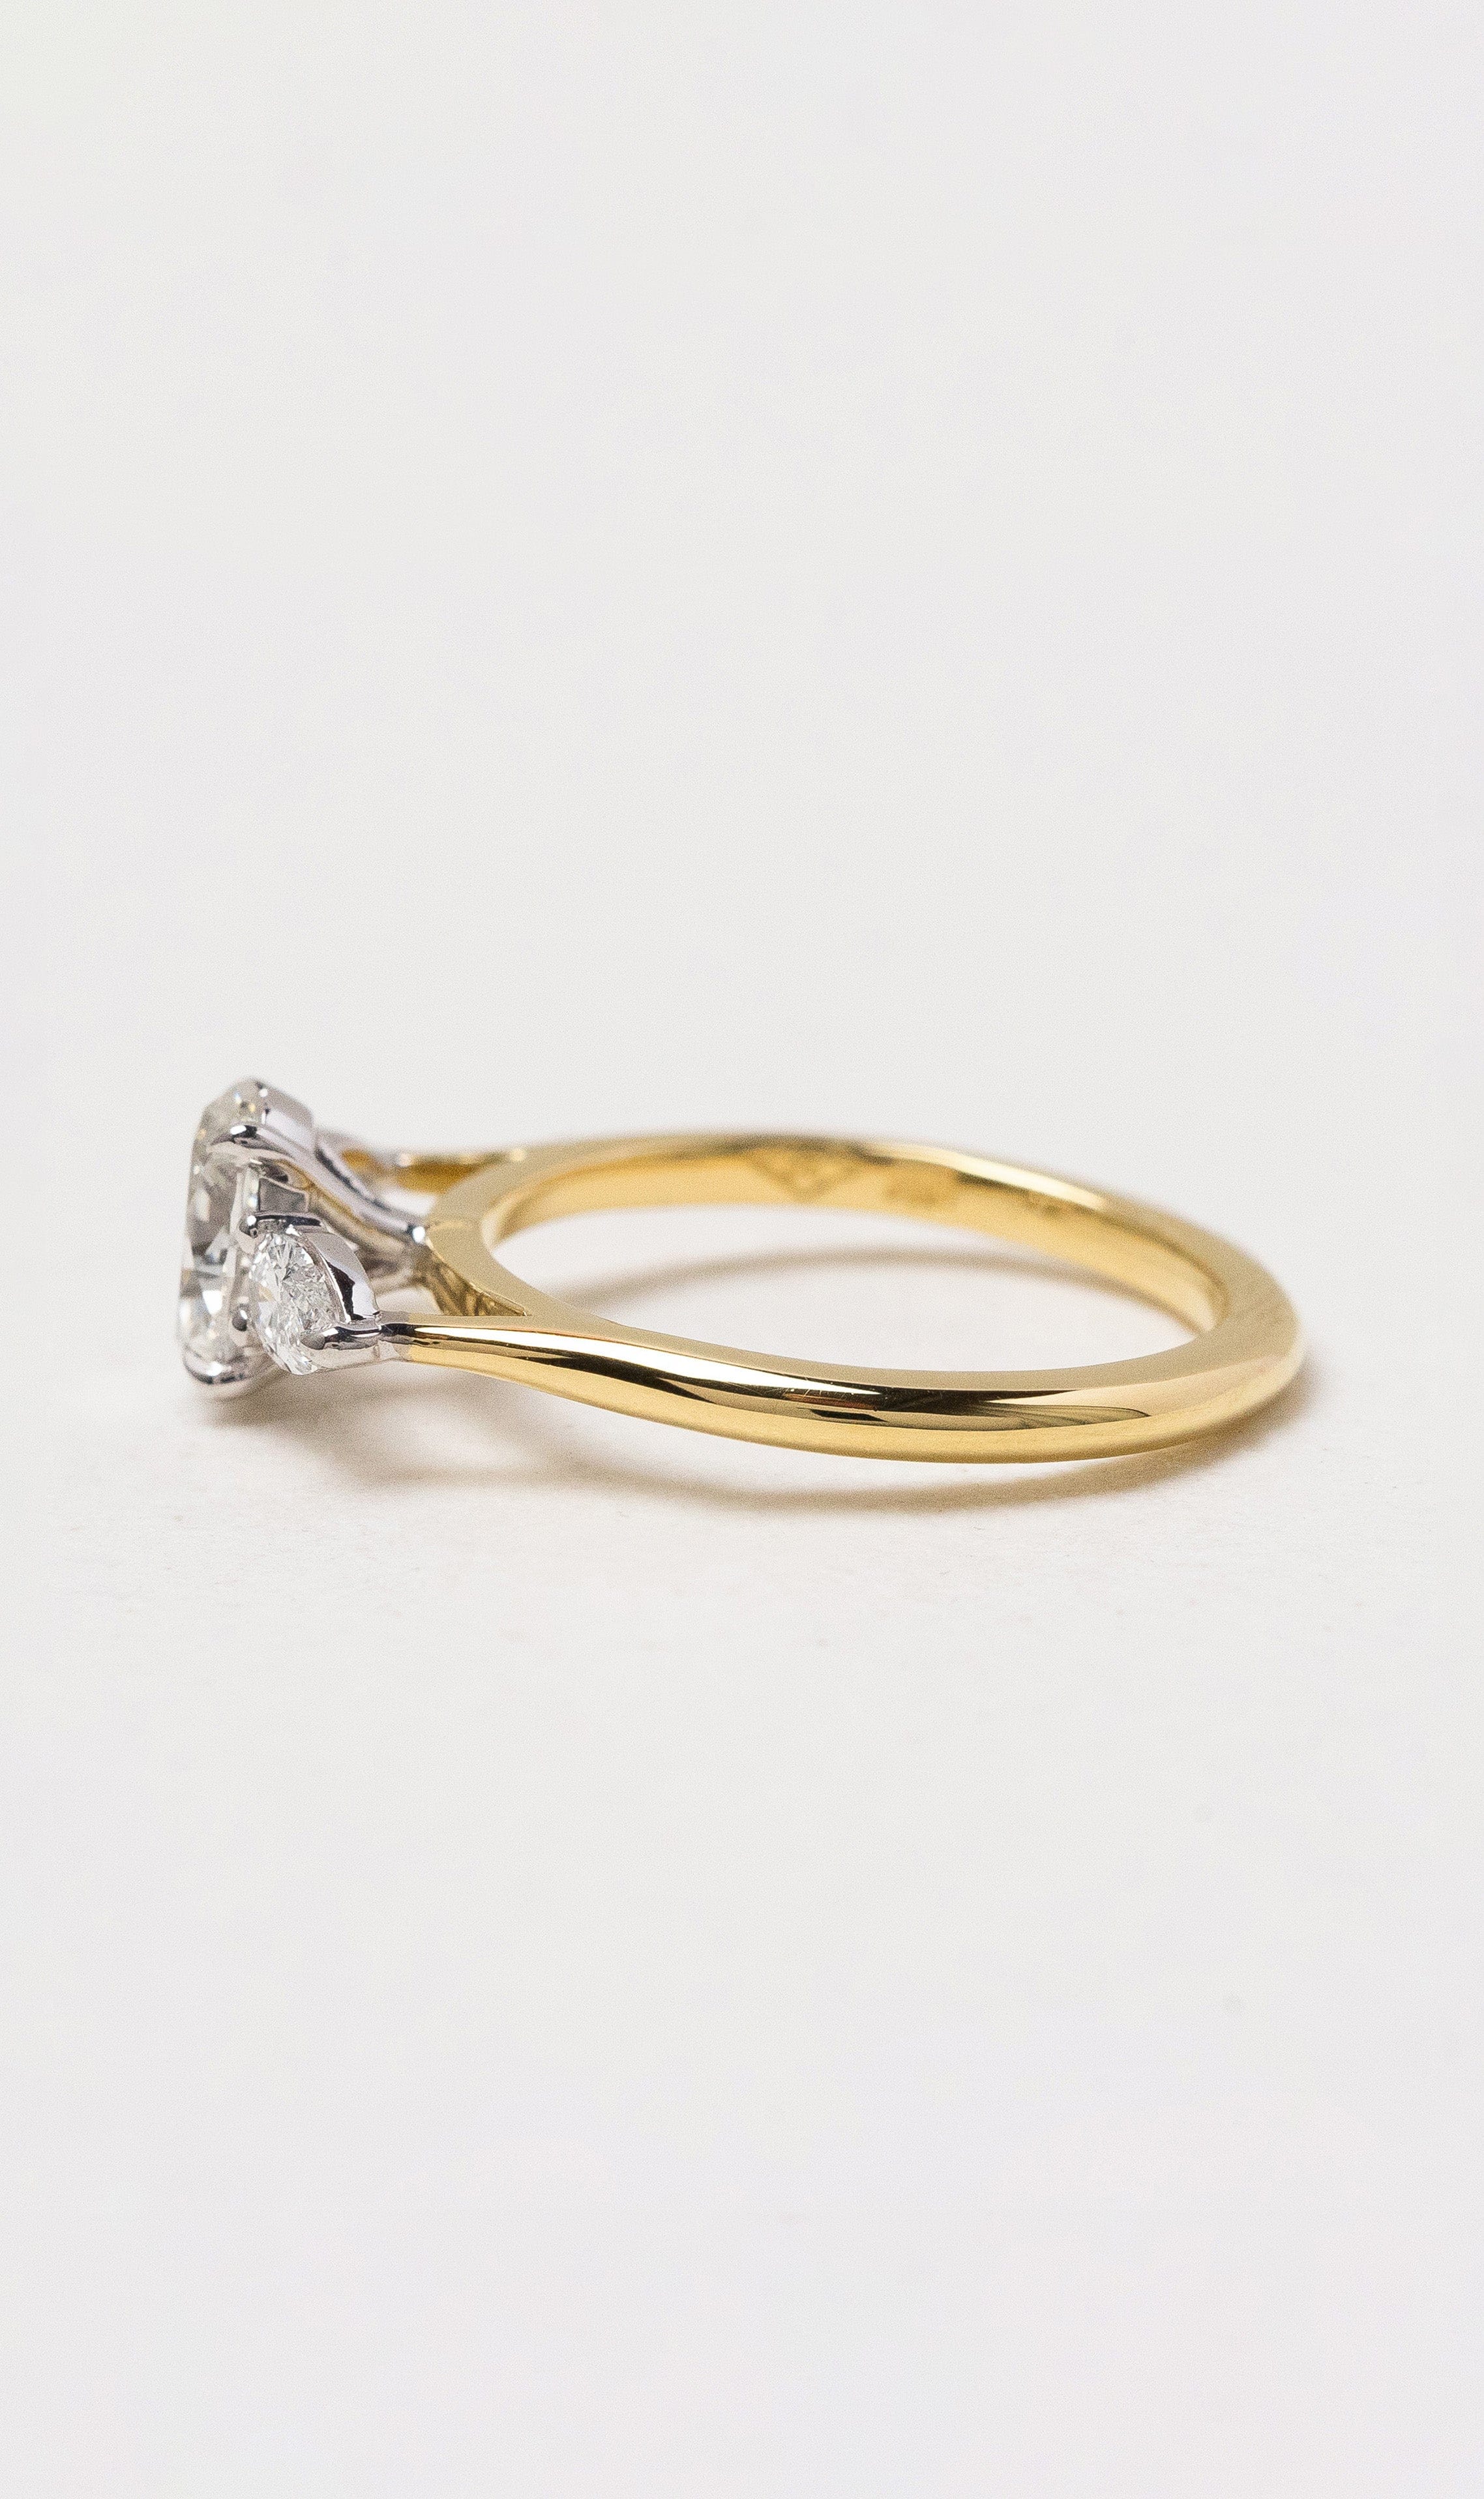 Hogans Family Jewellers 18K YWG Trilogy Diamond Ring